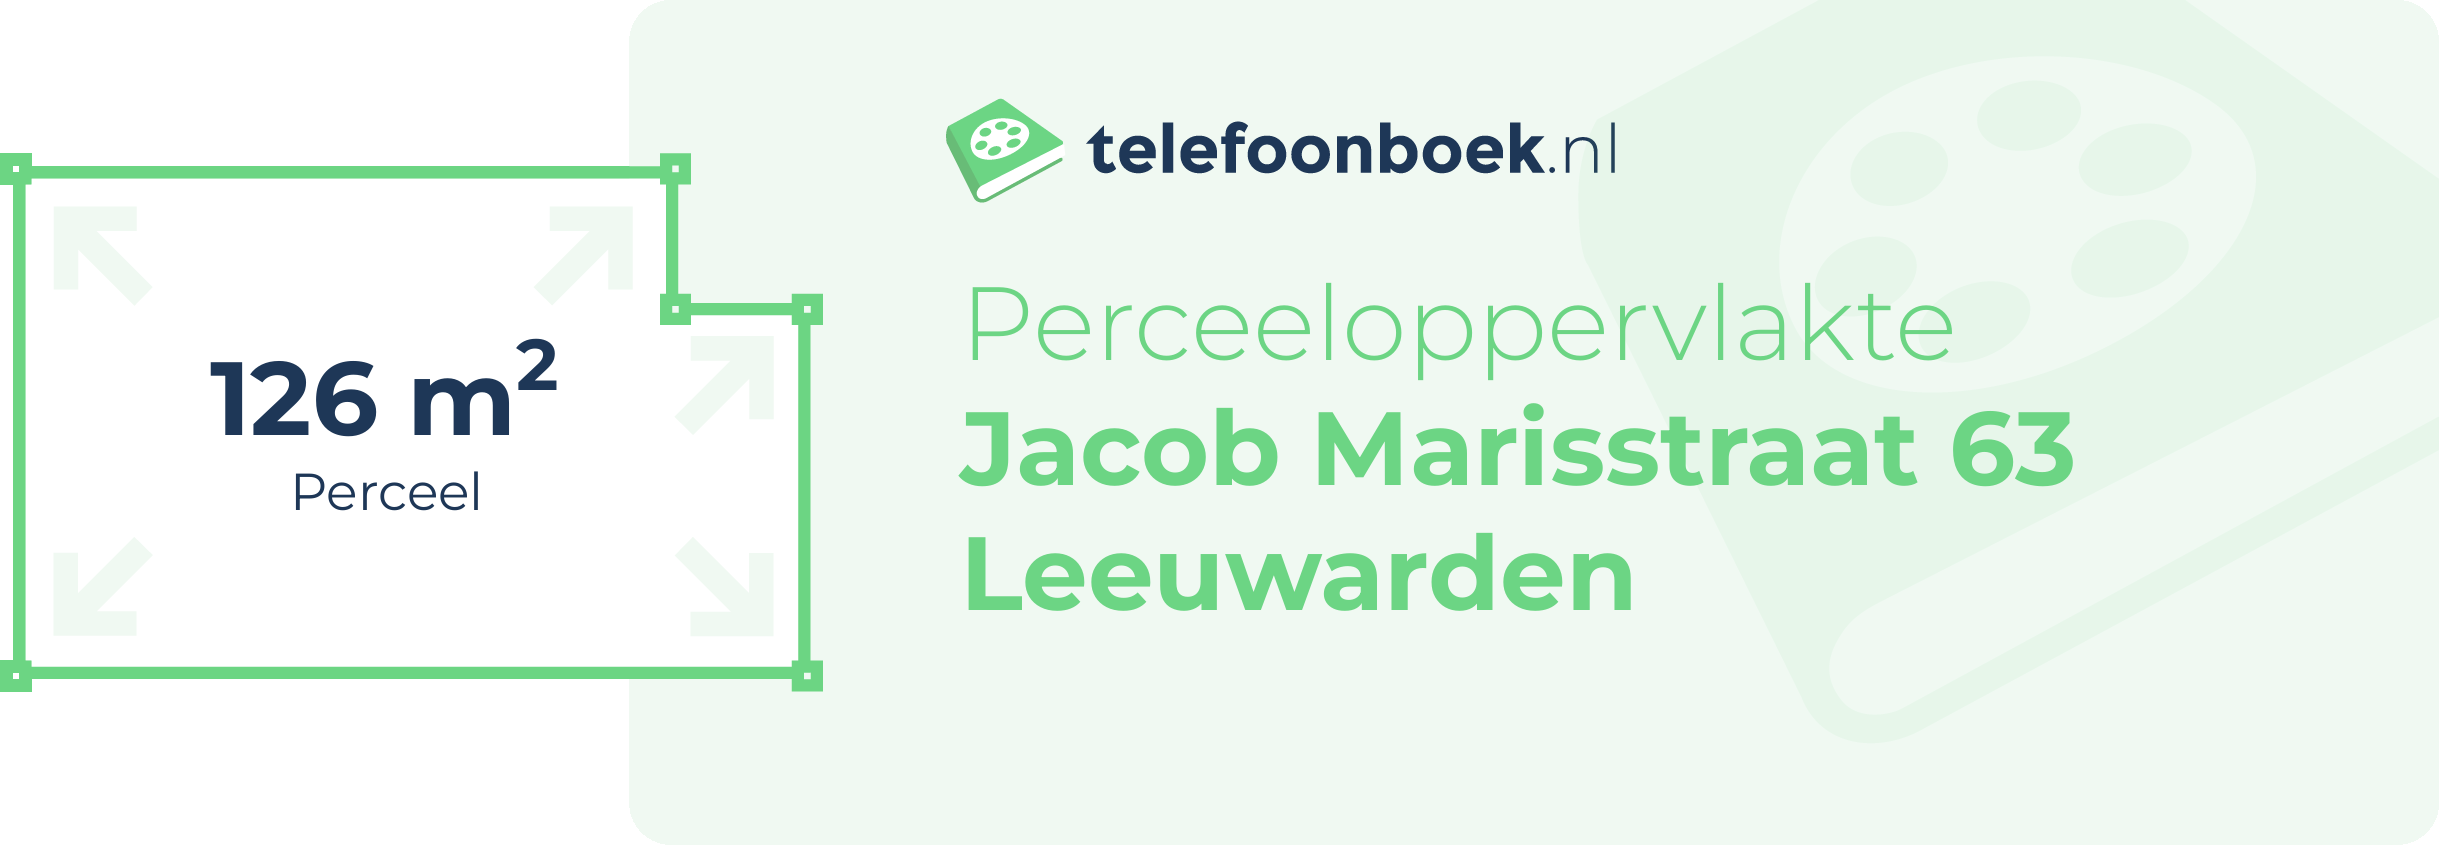 Perceeloppervlakte Jacob Marisstraat 63 Leeuwarden